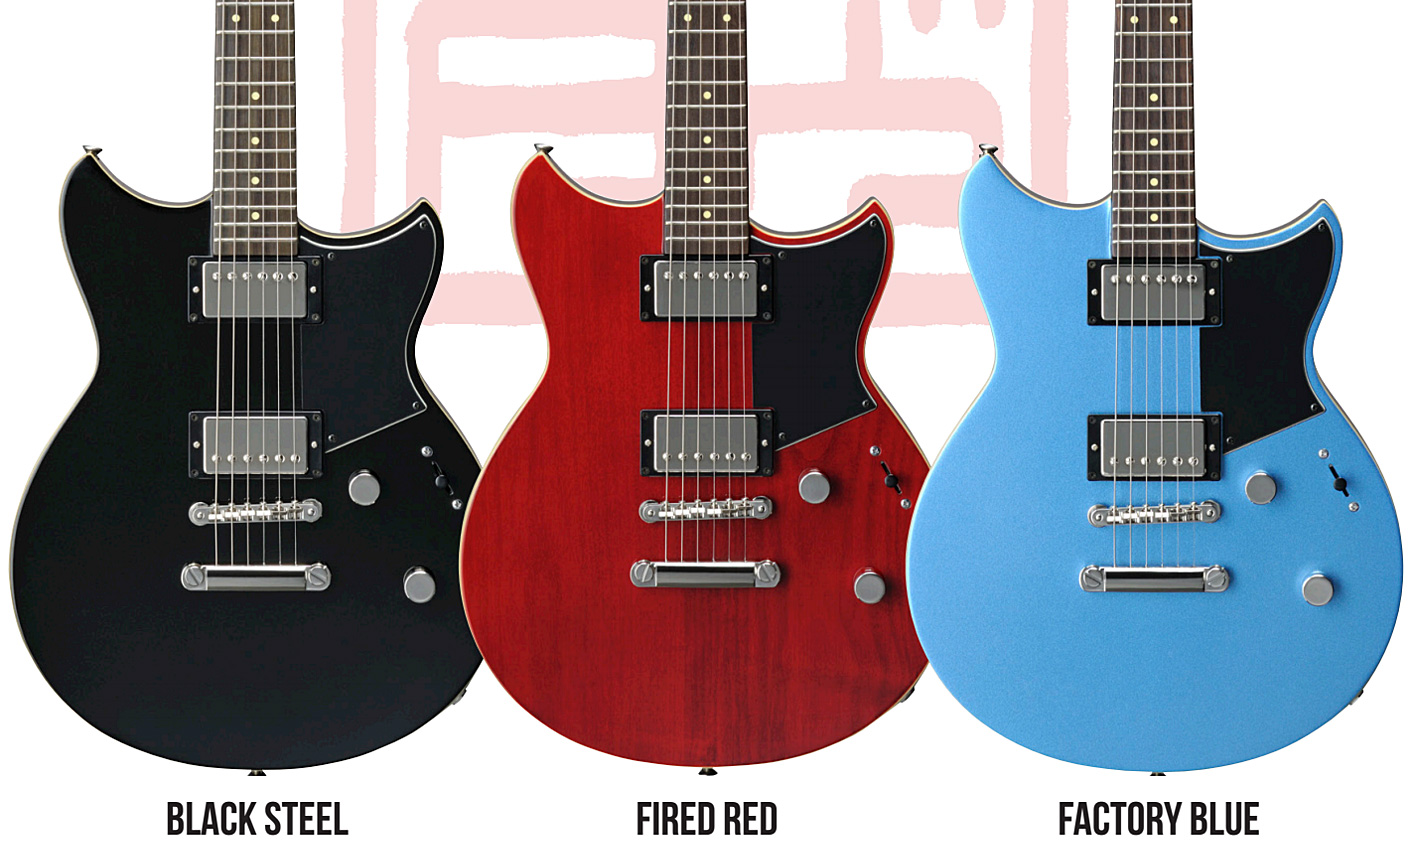 Yamaha Revstar Rs420 - Fired Red - Guitarra eléctrica de doble corte - Variation 2